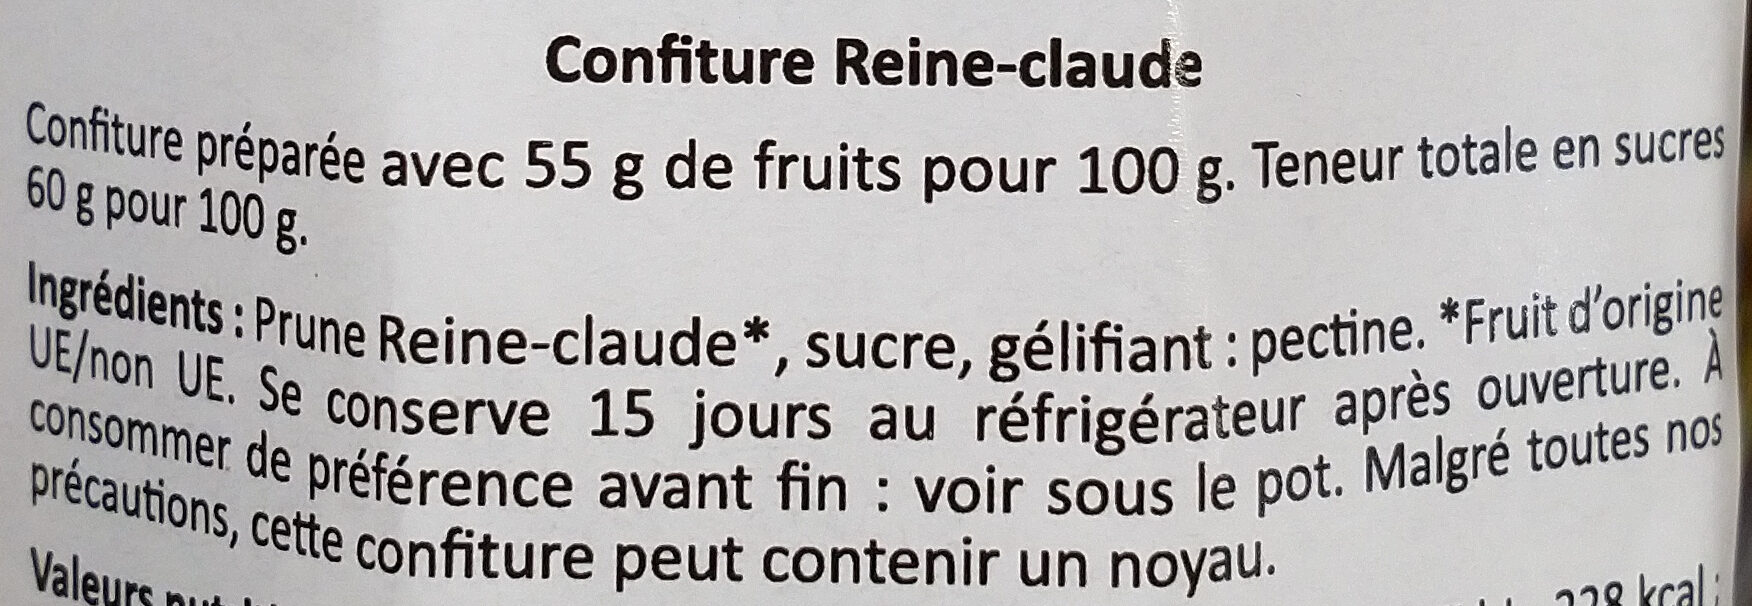 Confiture extra Reine-claude - Ingredients - fr